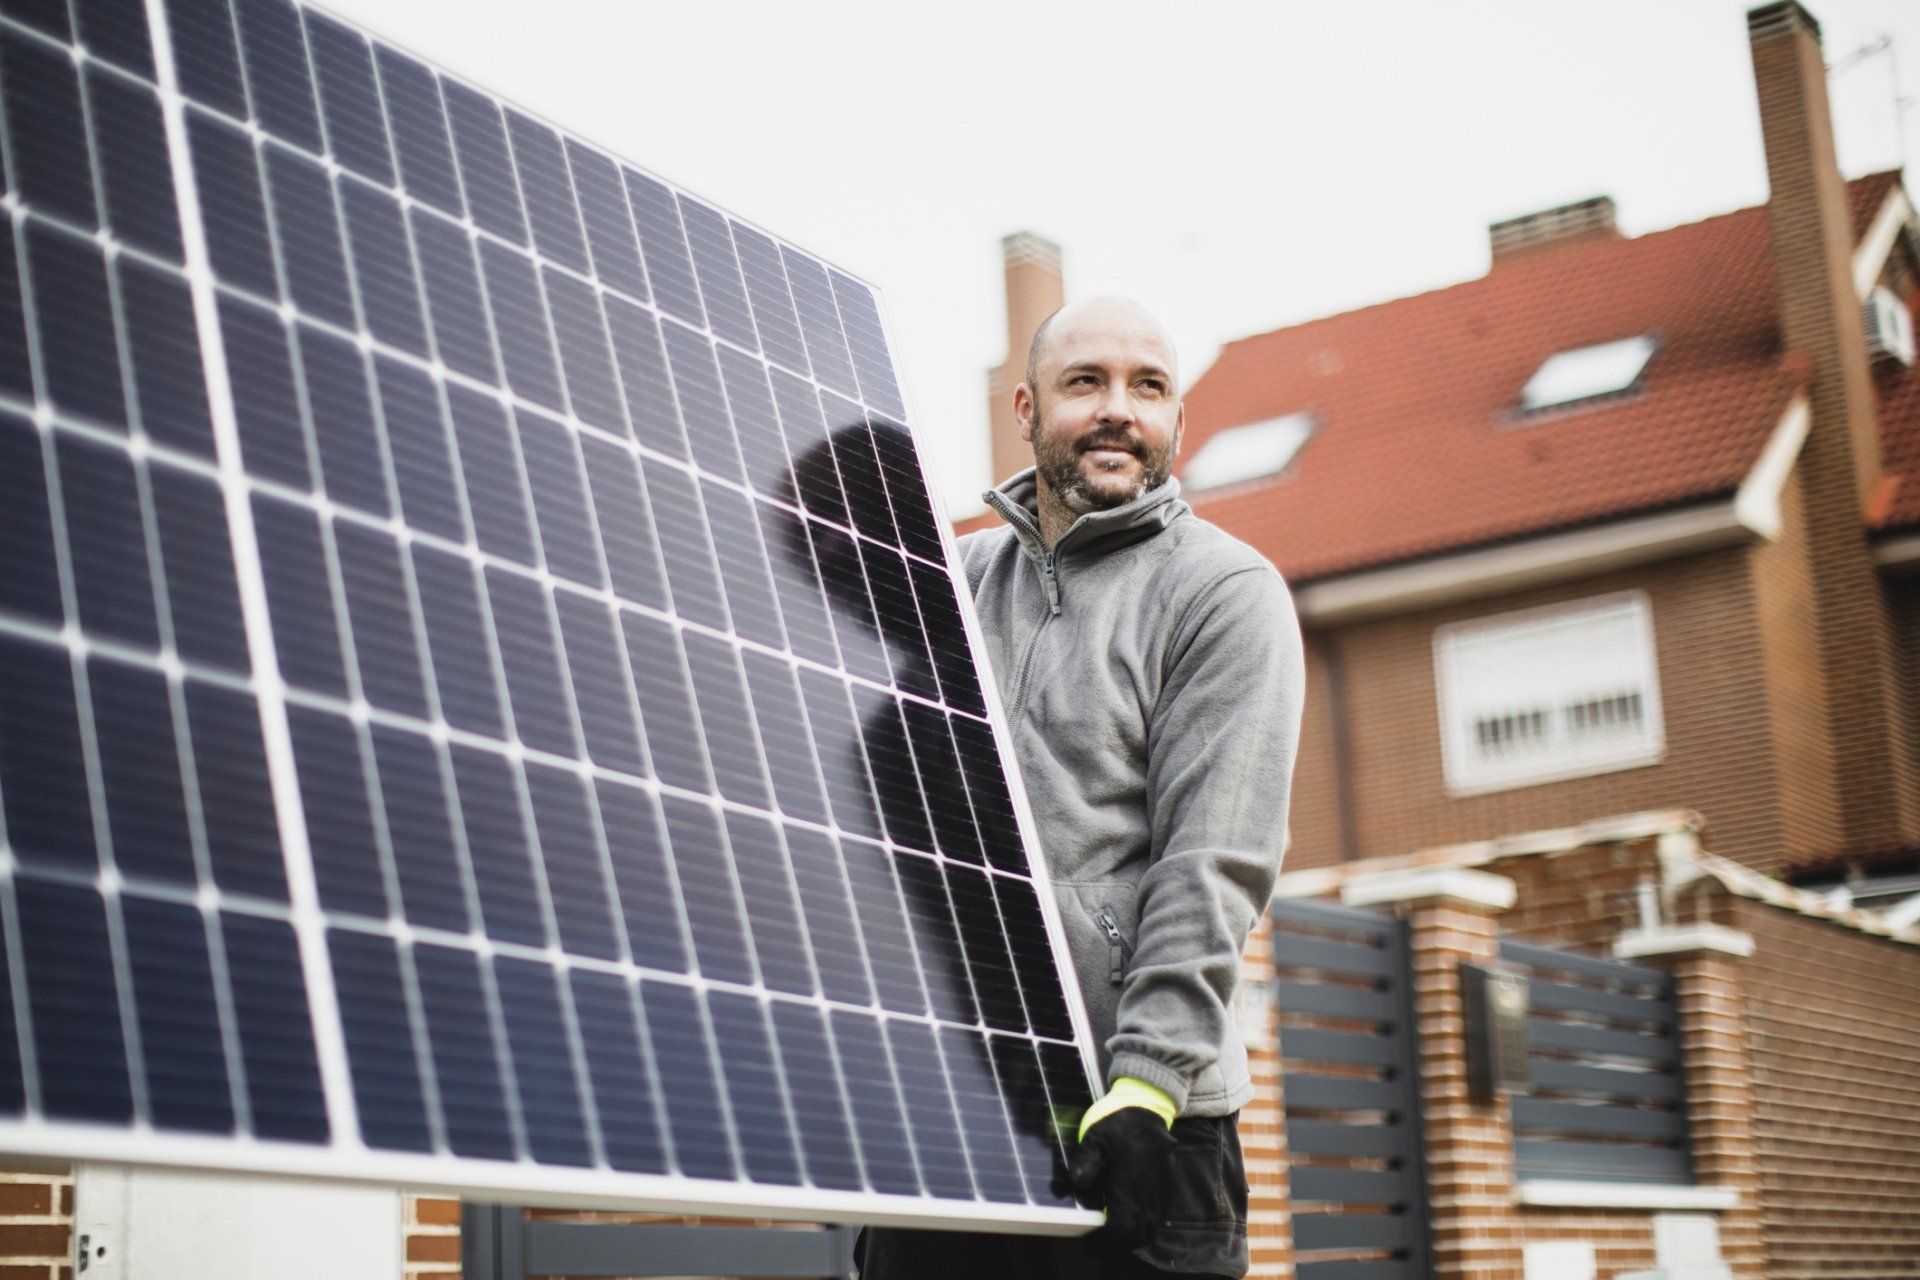 Owner Installing Solar Panel - PYA Insurance Brokerage in Ontario, CA